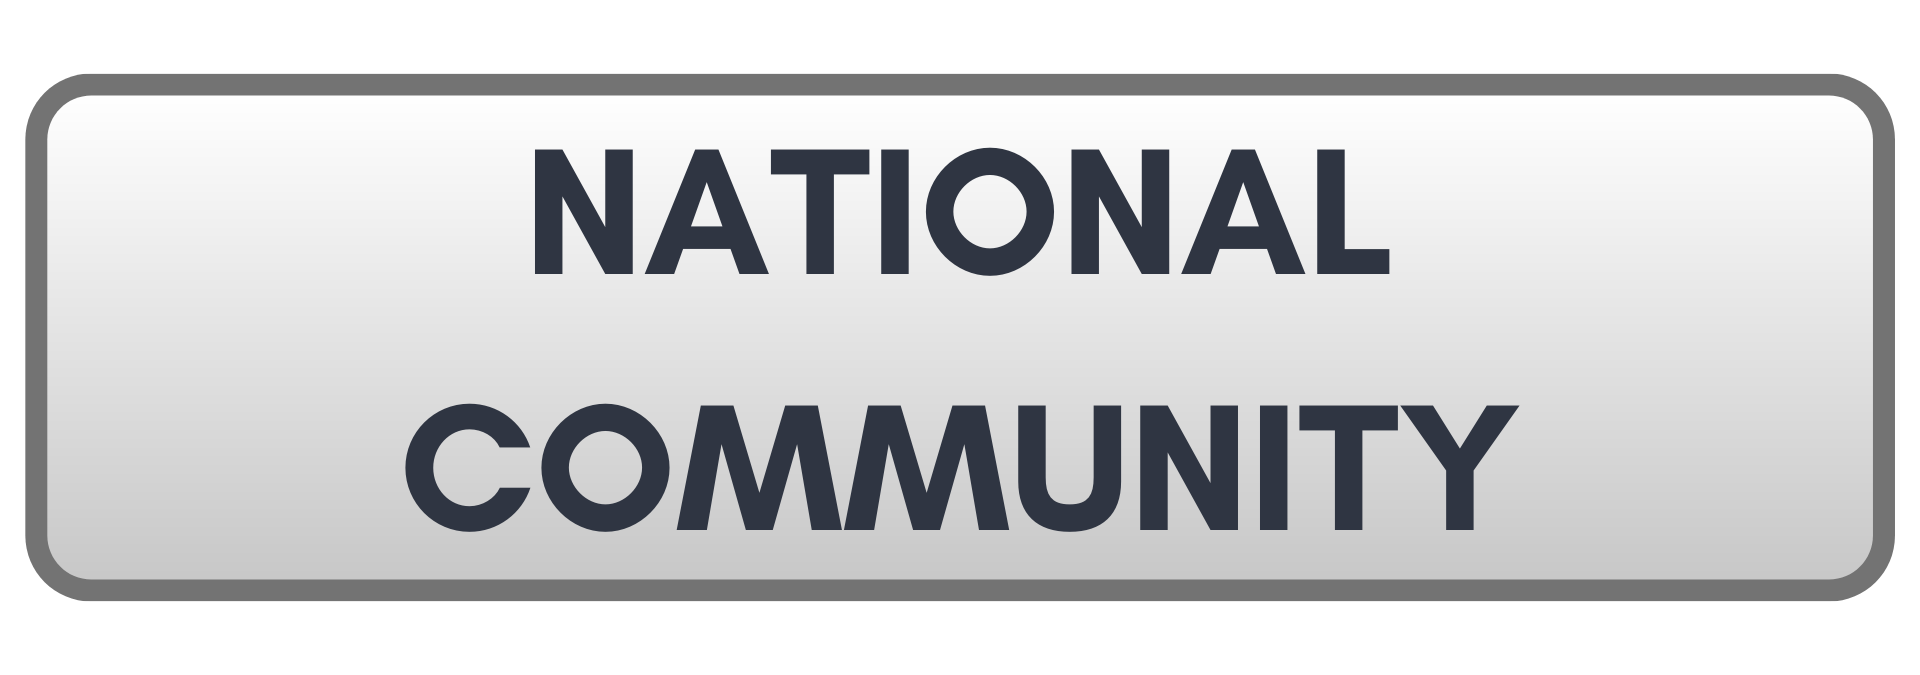 National Community